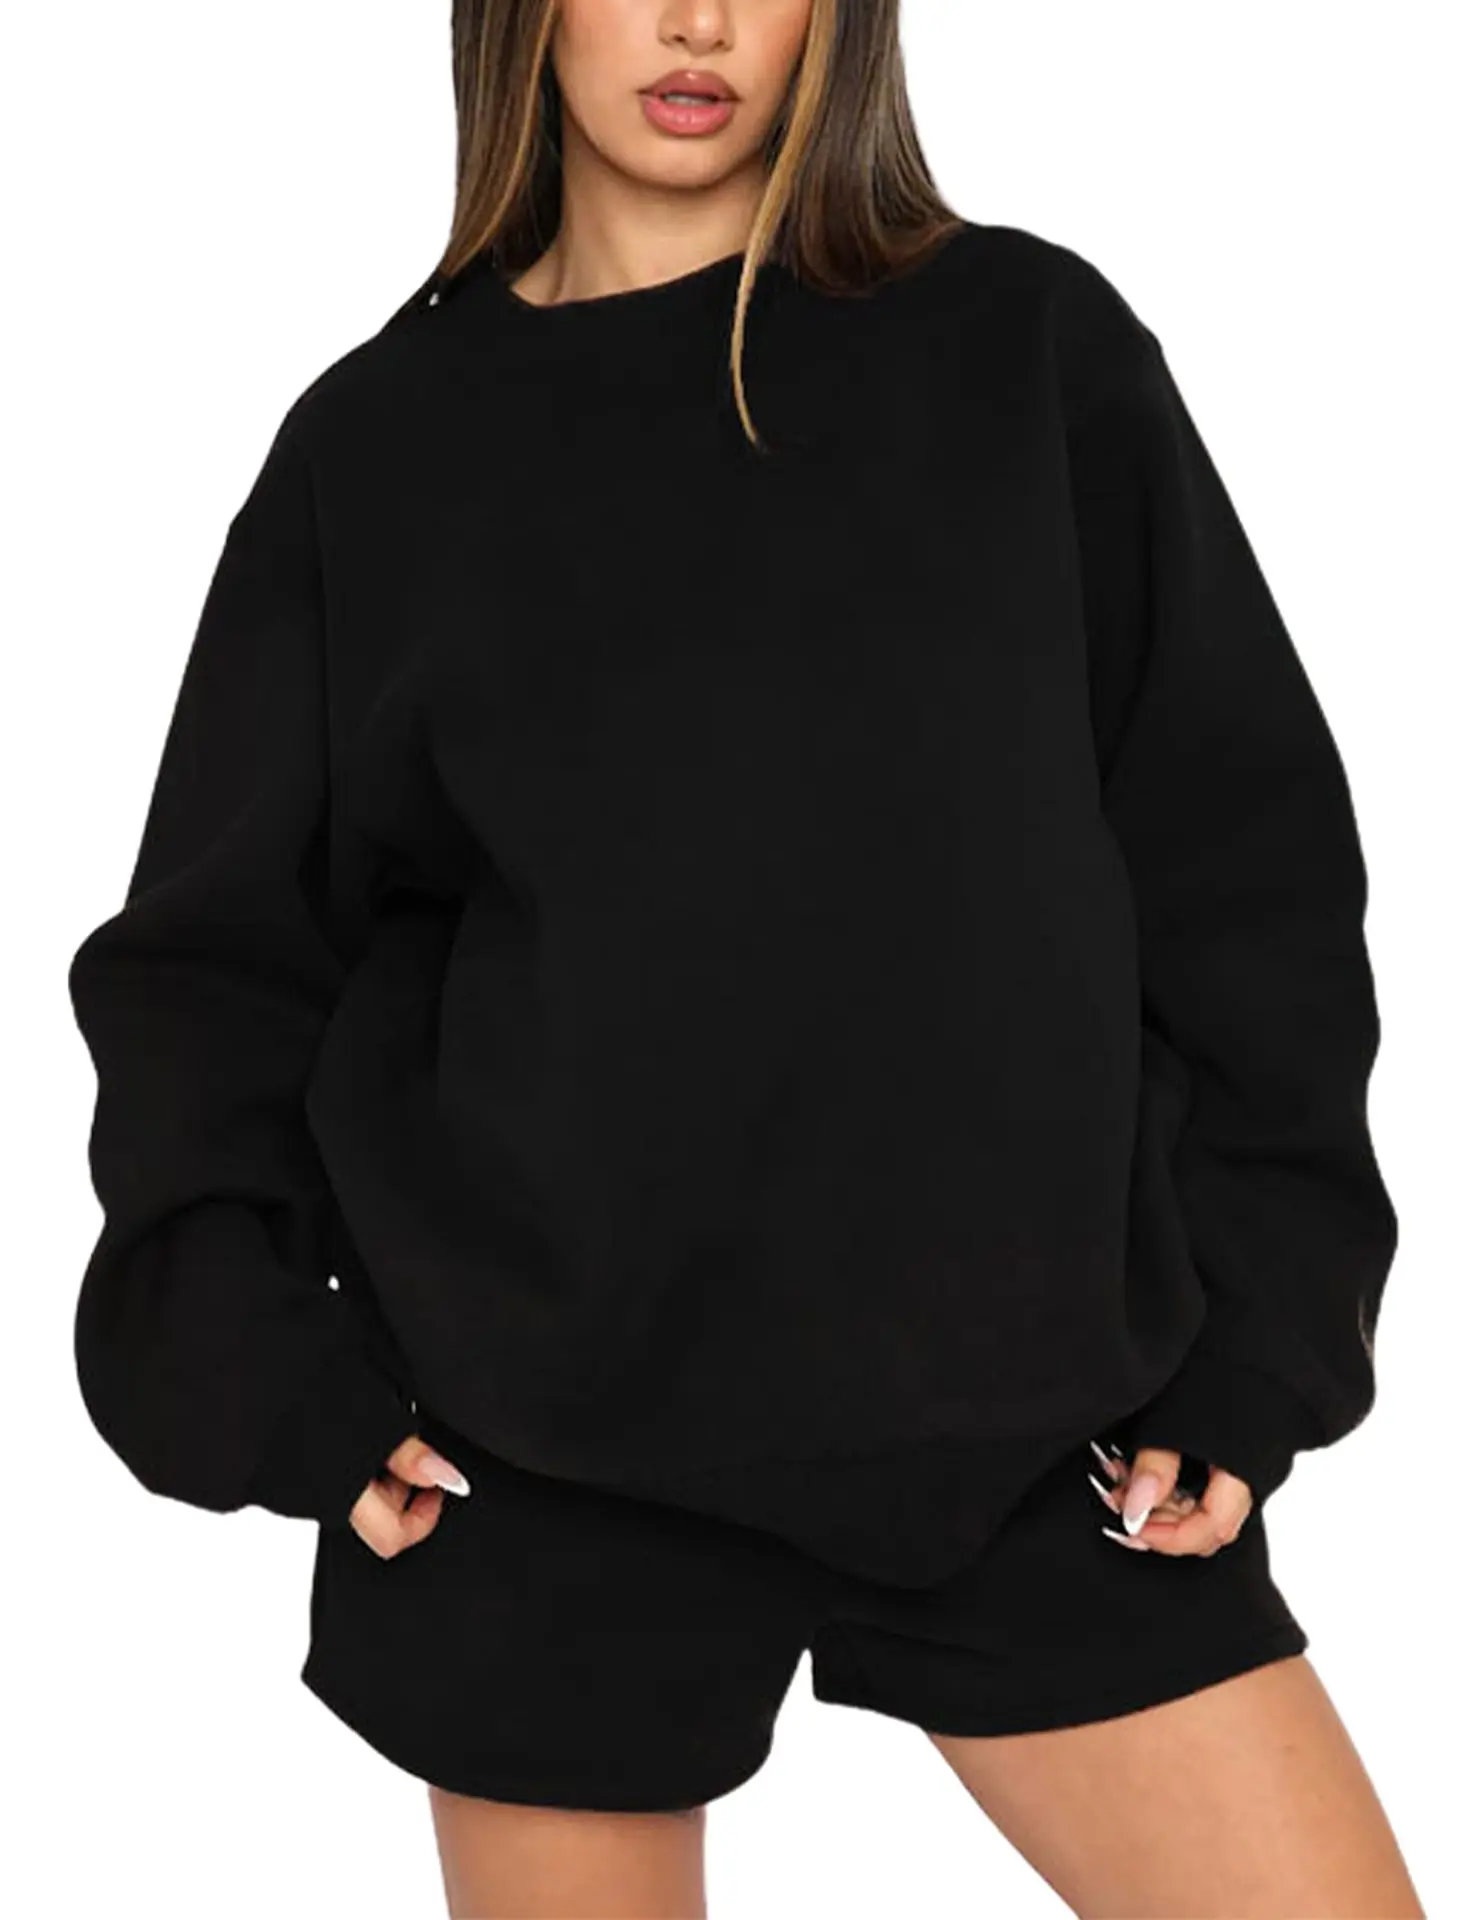 Ying Tang Custom Autumn Hot Sale Pullover Crewneck Plain Loose Casual Fashion Shorts Sweatshirt Set For Women OEM/ODM